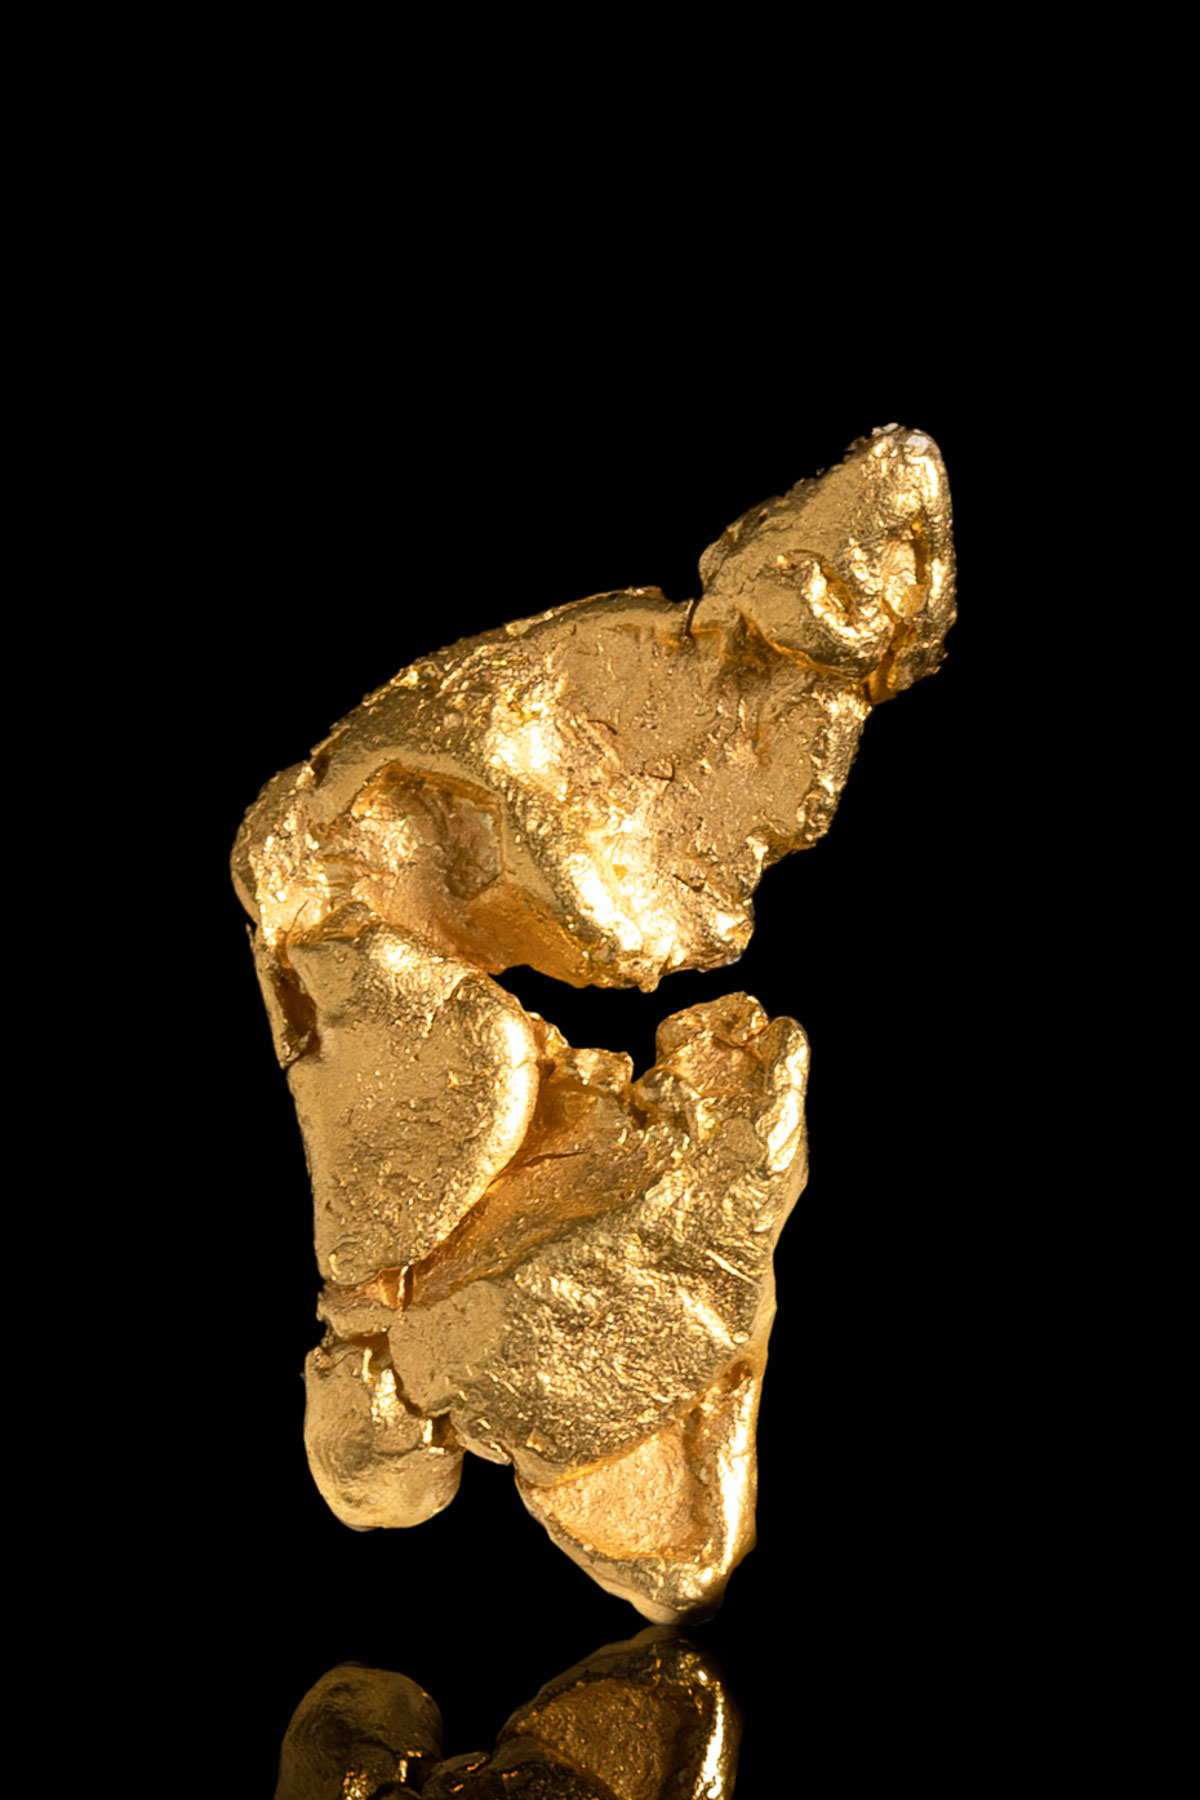 Unique Folded Leaf Gold Nugget from Alaska - 2021 Mining Season